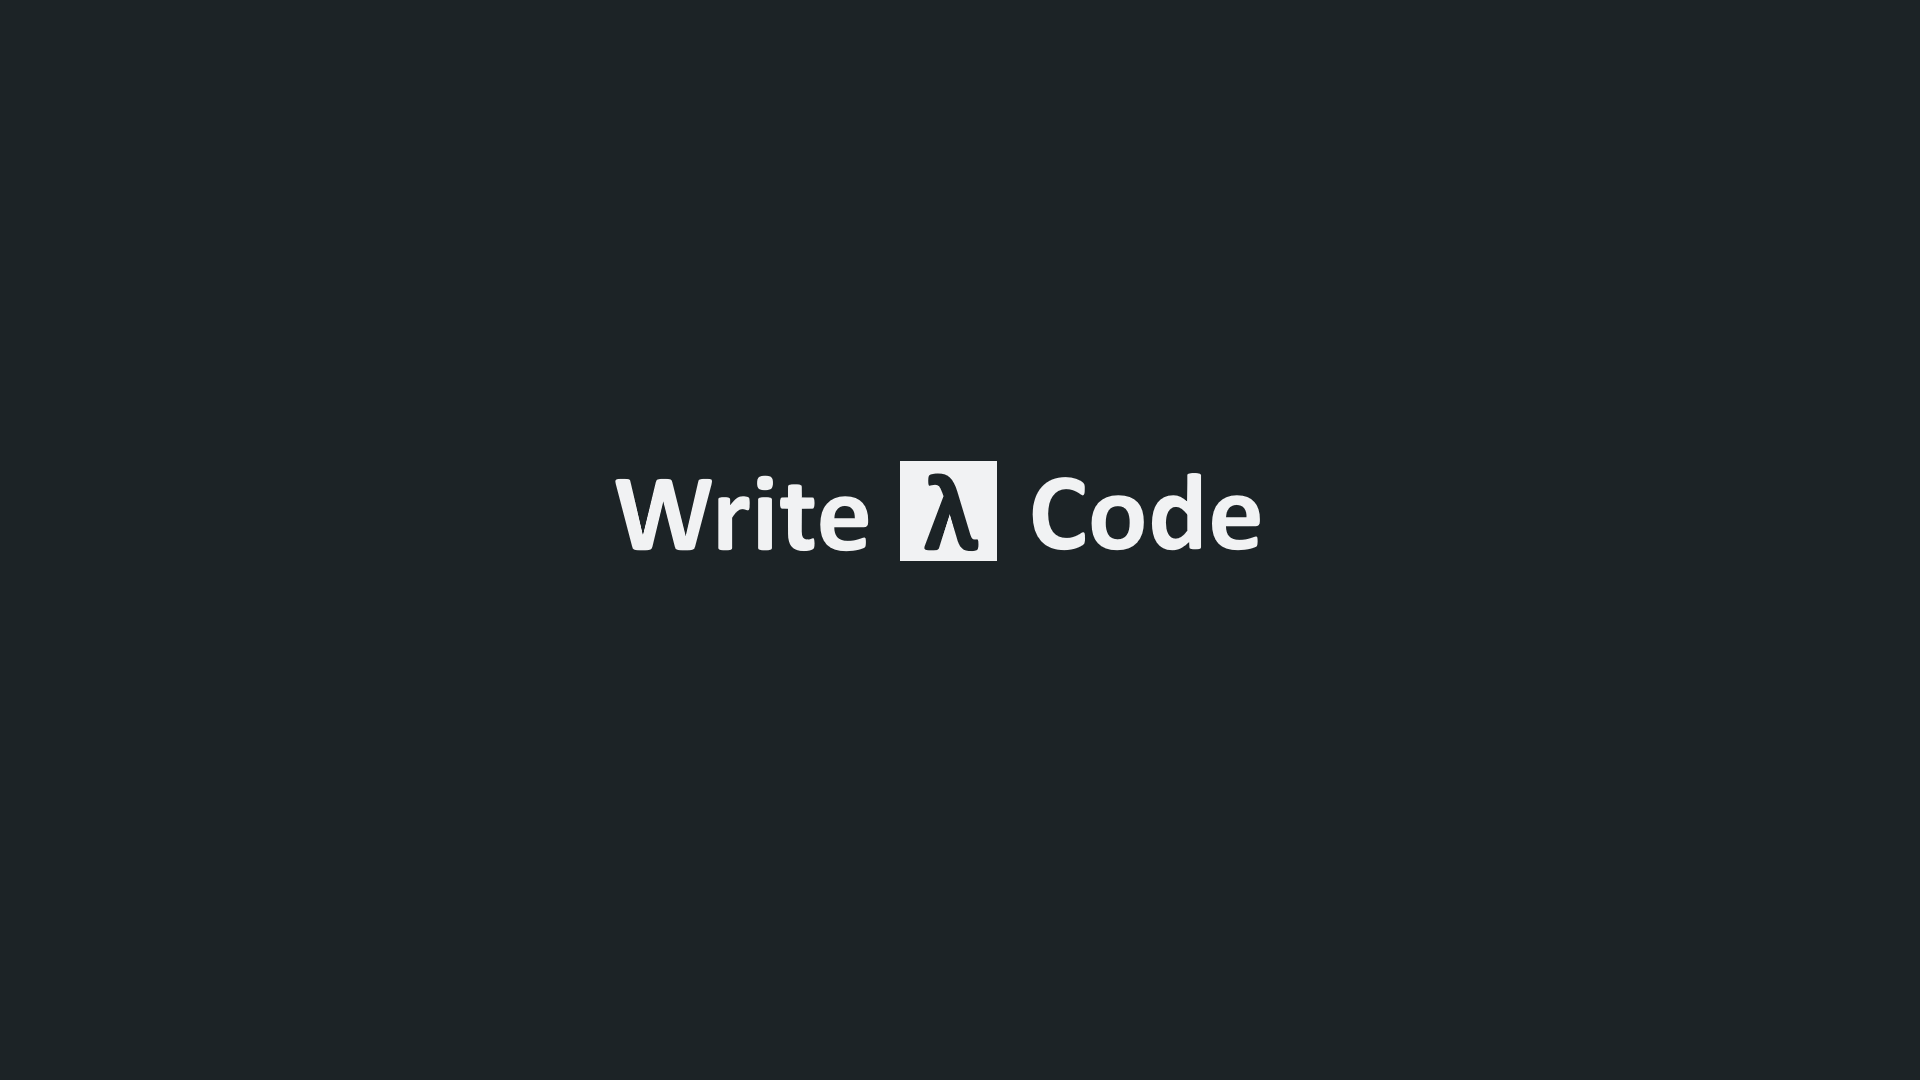 Write Code Wallpaper